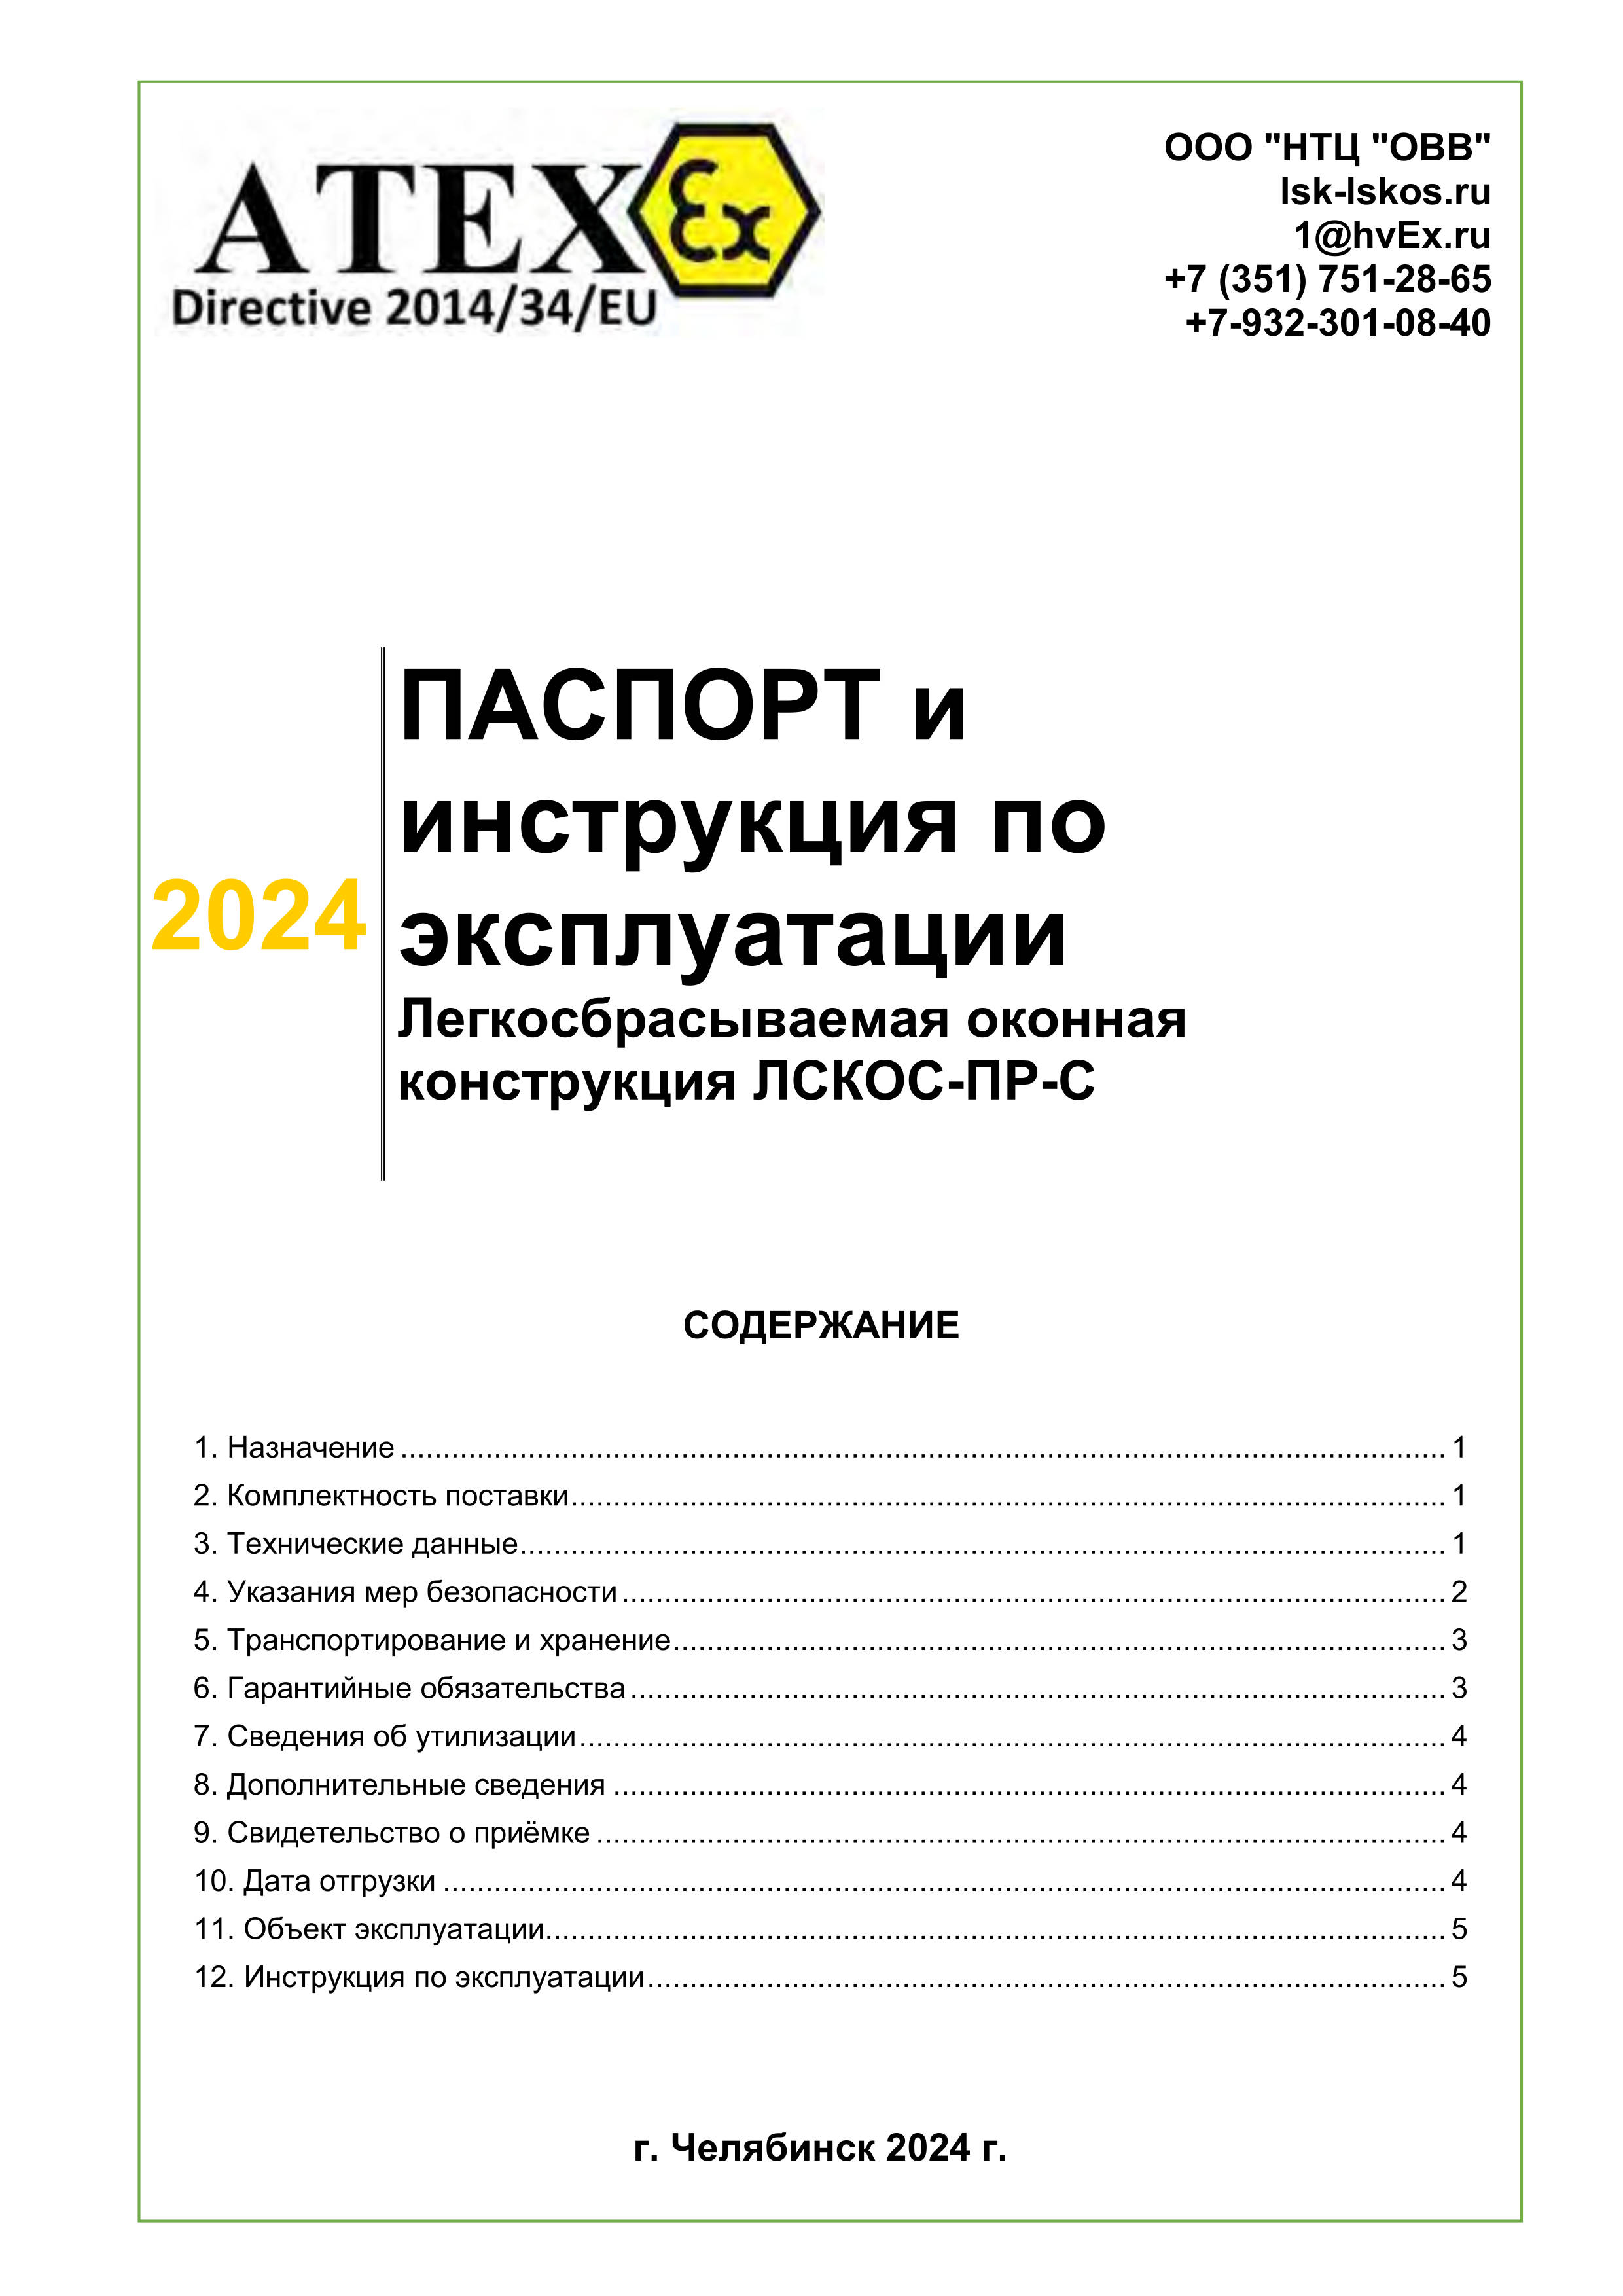 Паспорт и инструкция по эксплуатации ЛСКОС НТЦ ОВВ 2024